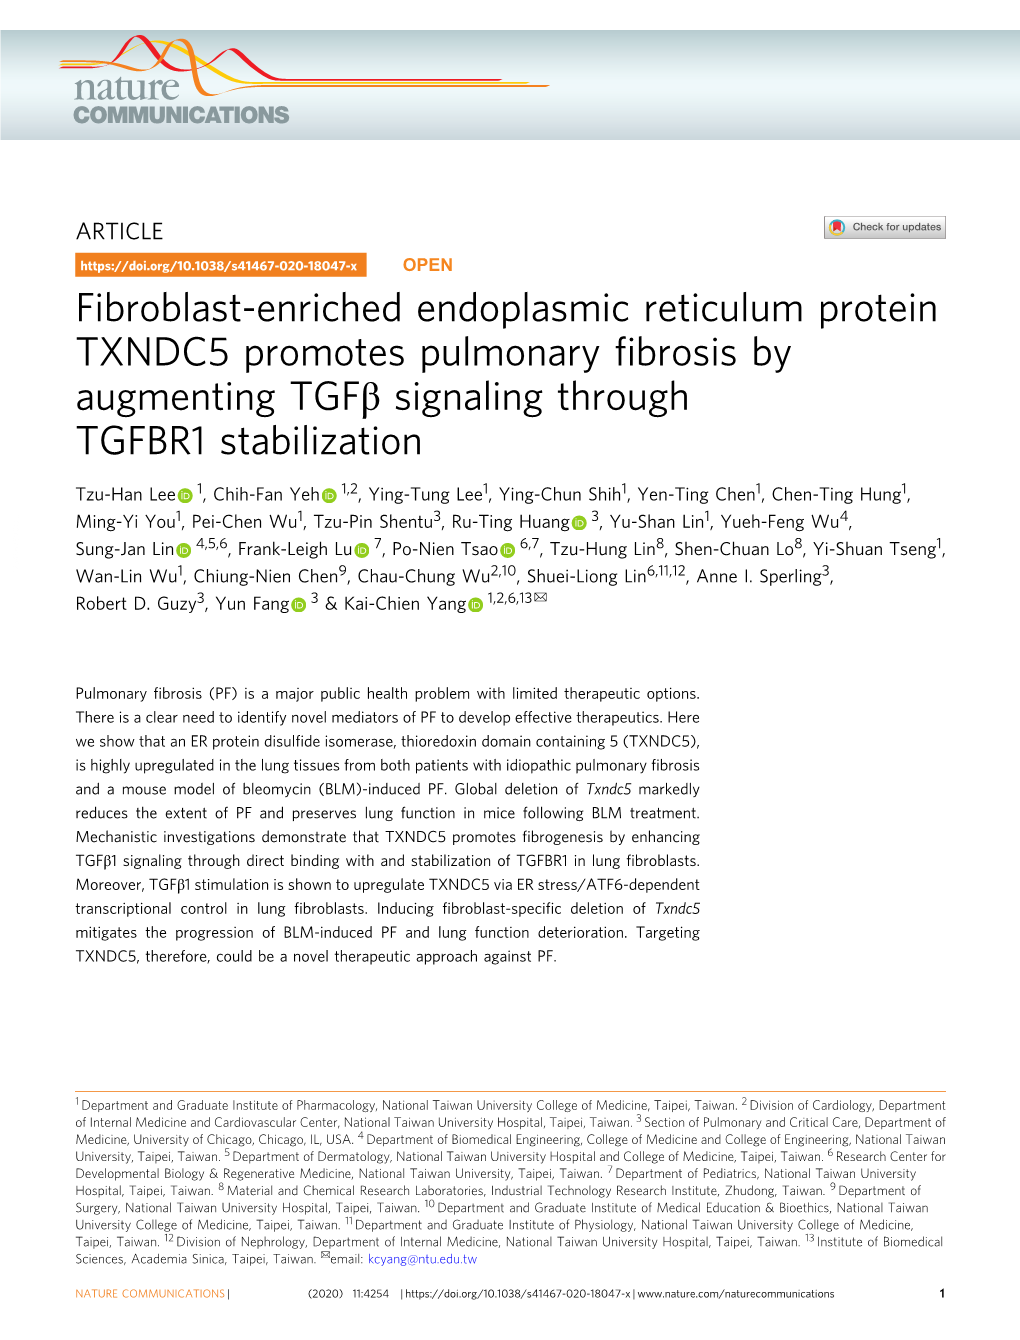 Fibroblast-Enriched Endoplasmic Reticulum Protein TXNDC5 Promotes Pulmonary ﬁbrosis by Augmenting Tgfβ Signaling Through TGFBR1 Stabilization